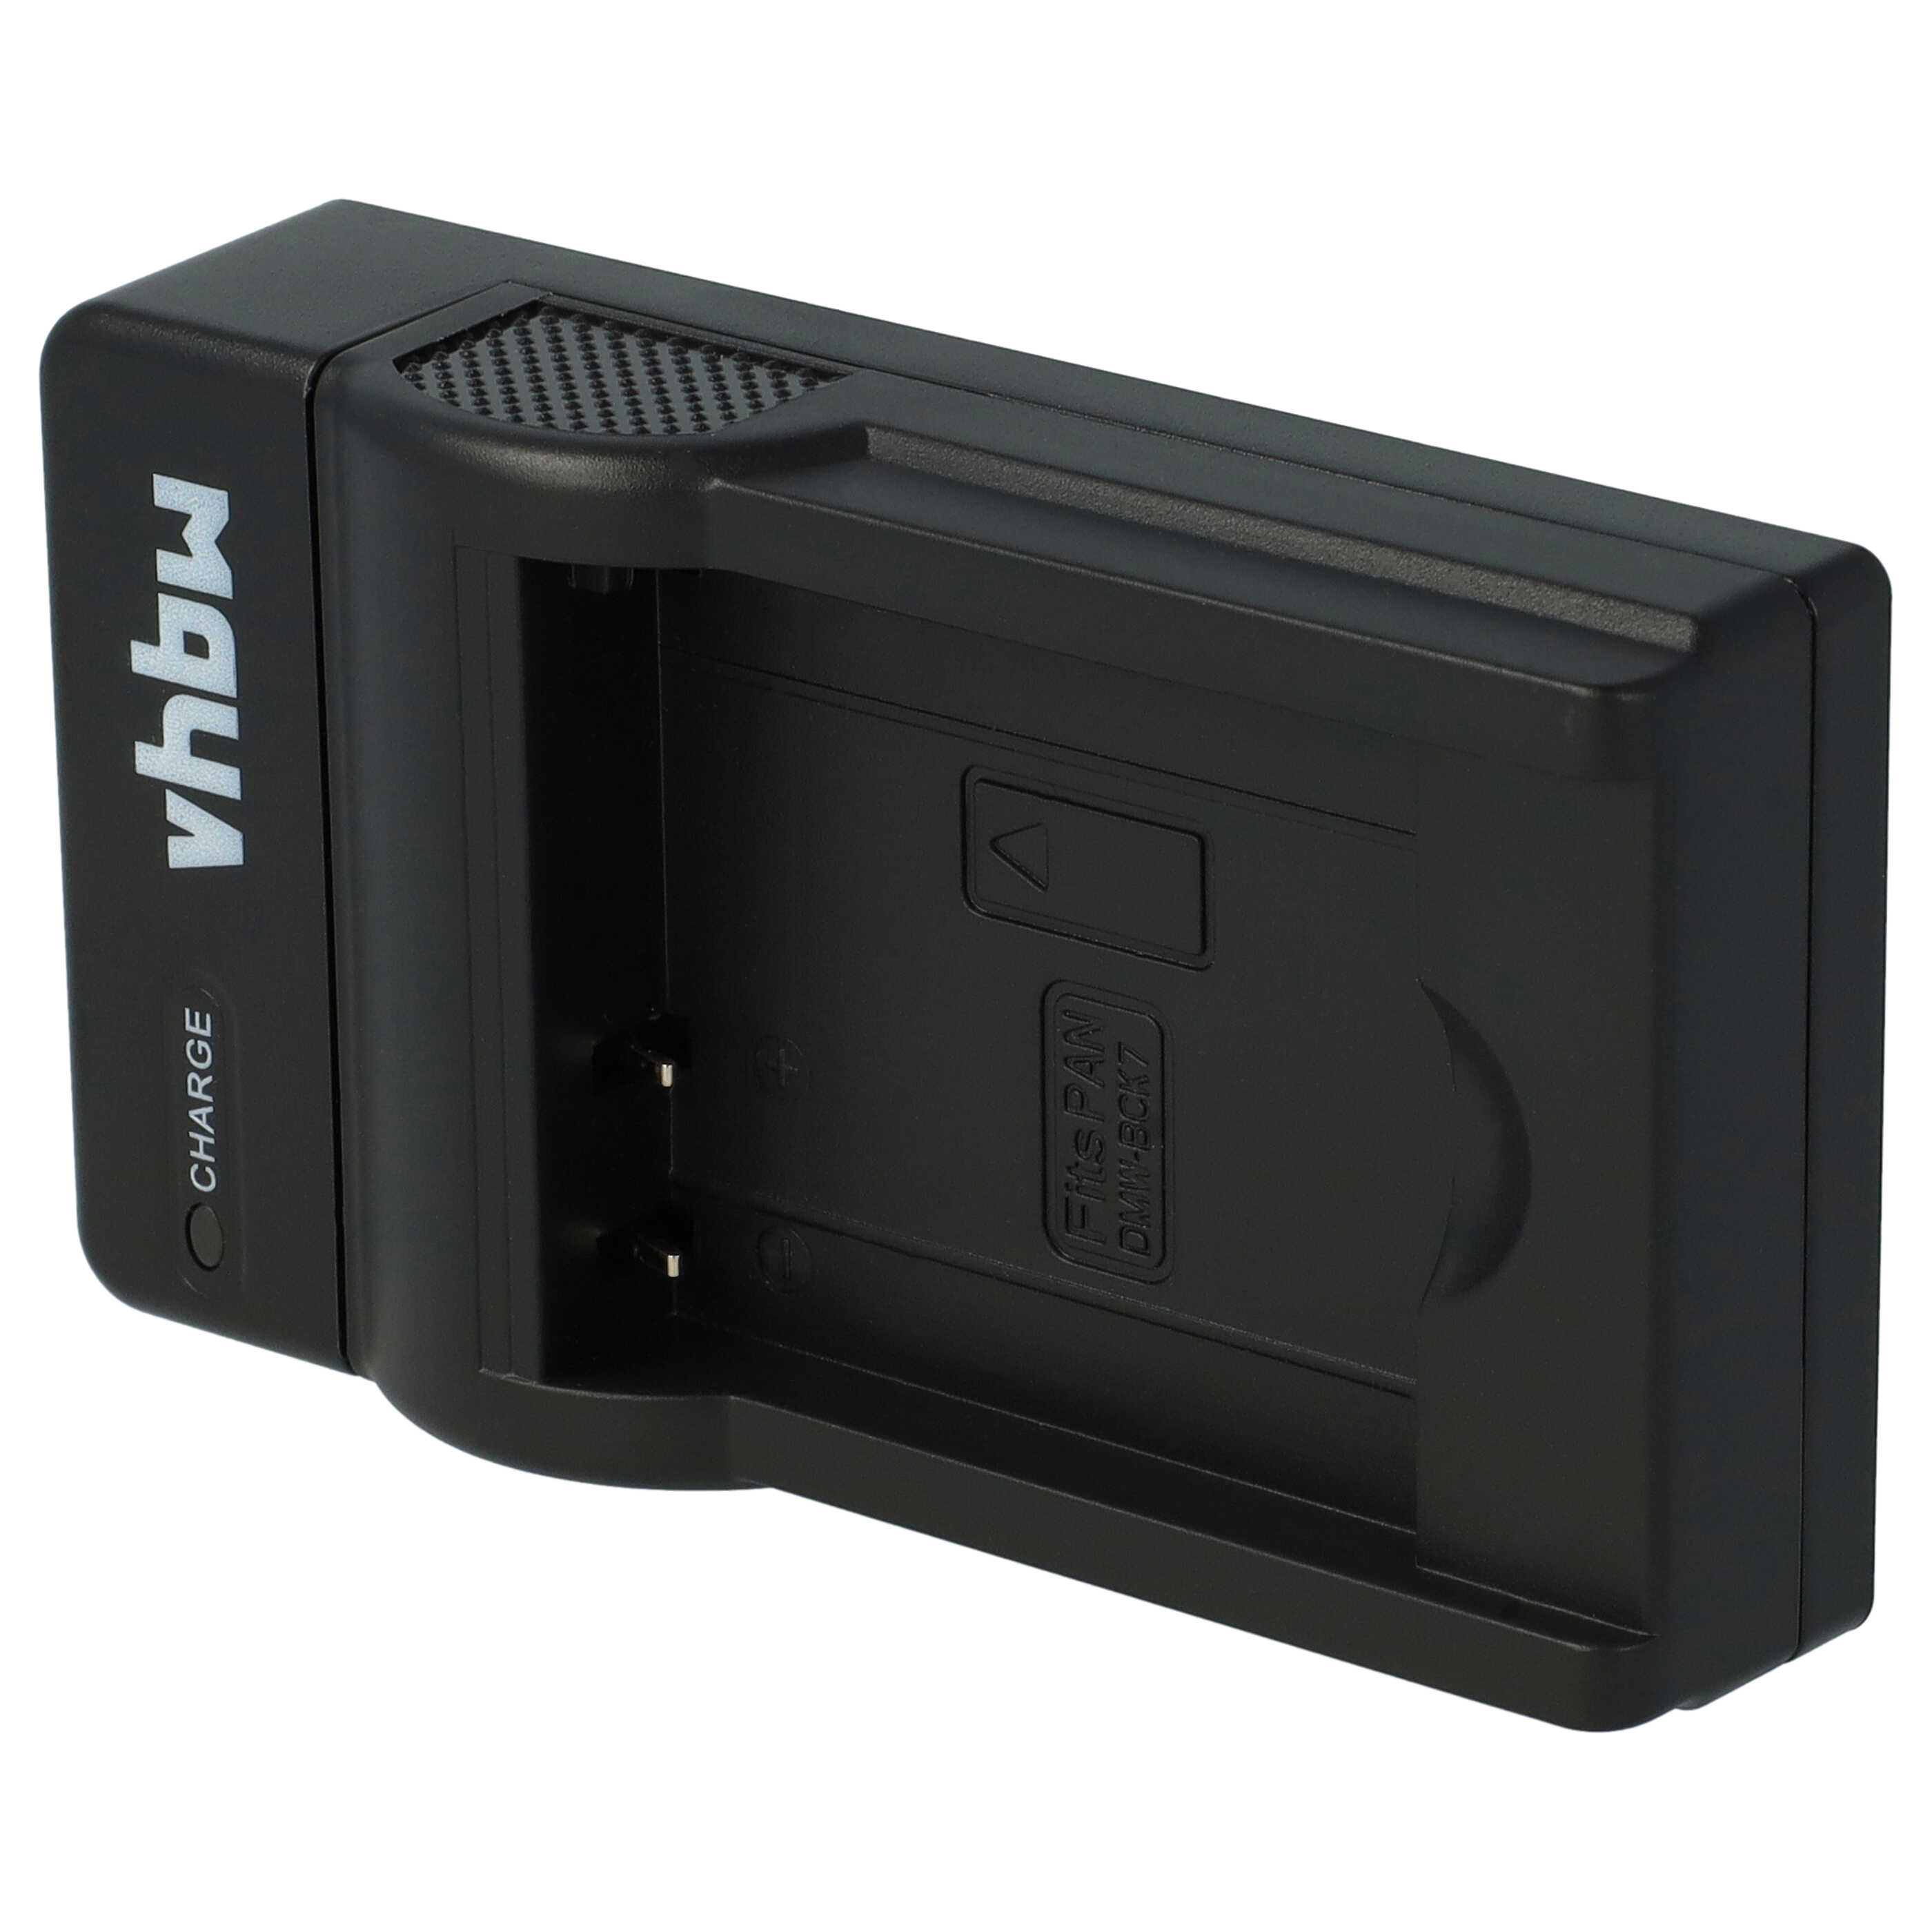 Akku Ladegerät passend für Lumix DMC-FH2 Kamera u.a. - 0,5 A, 4,2 V